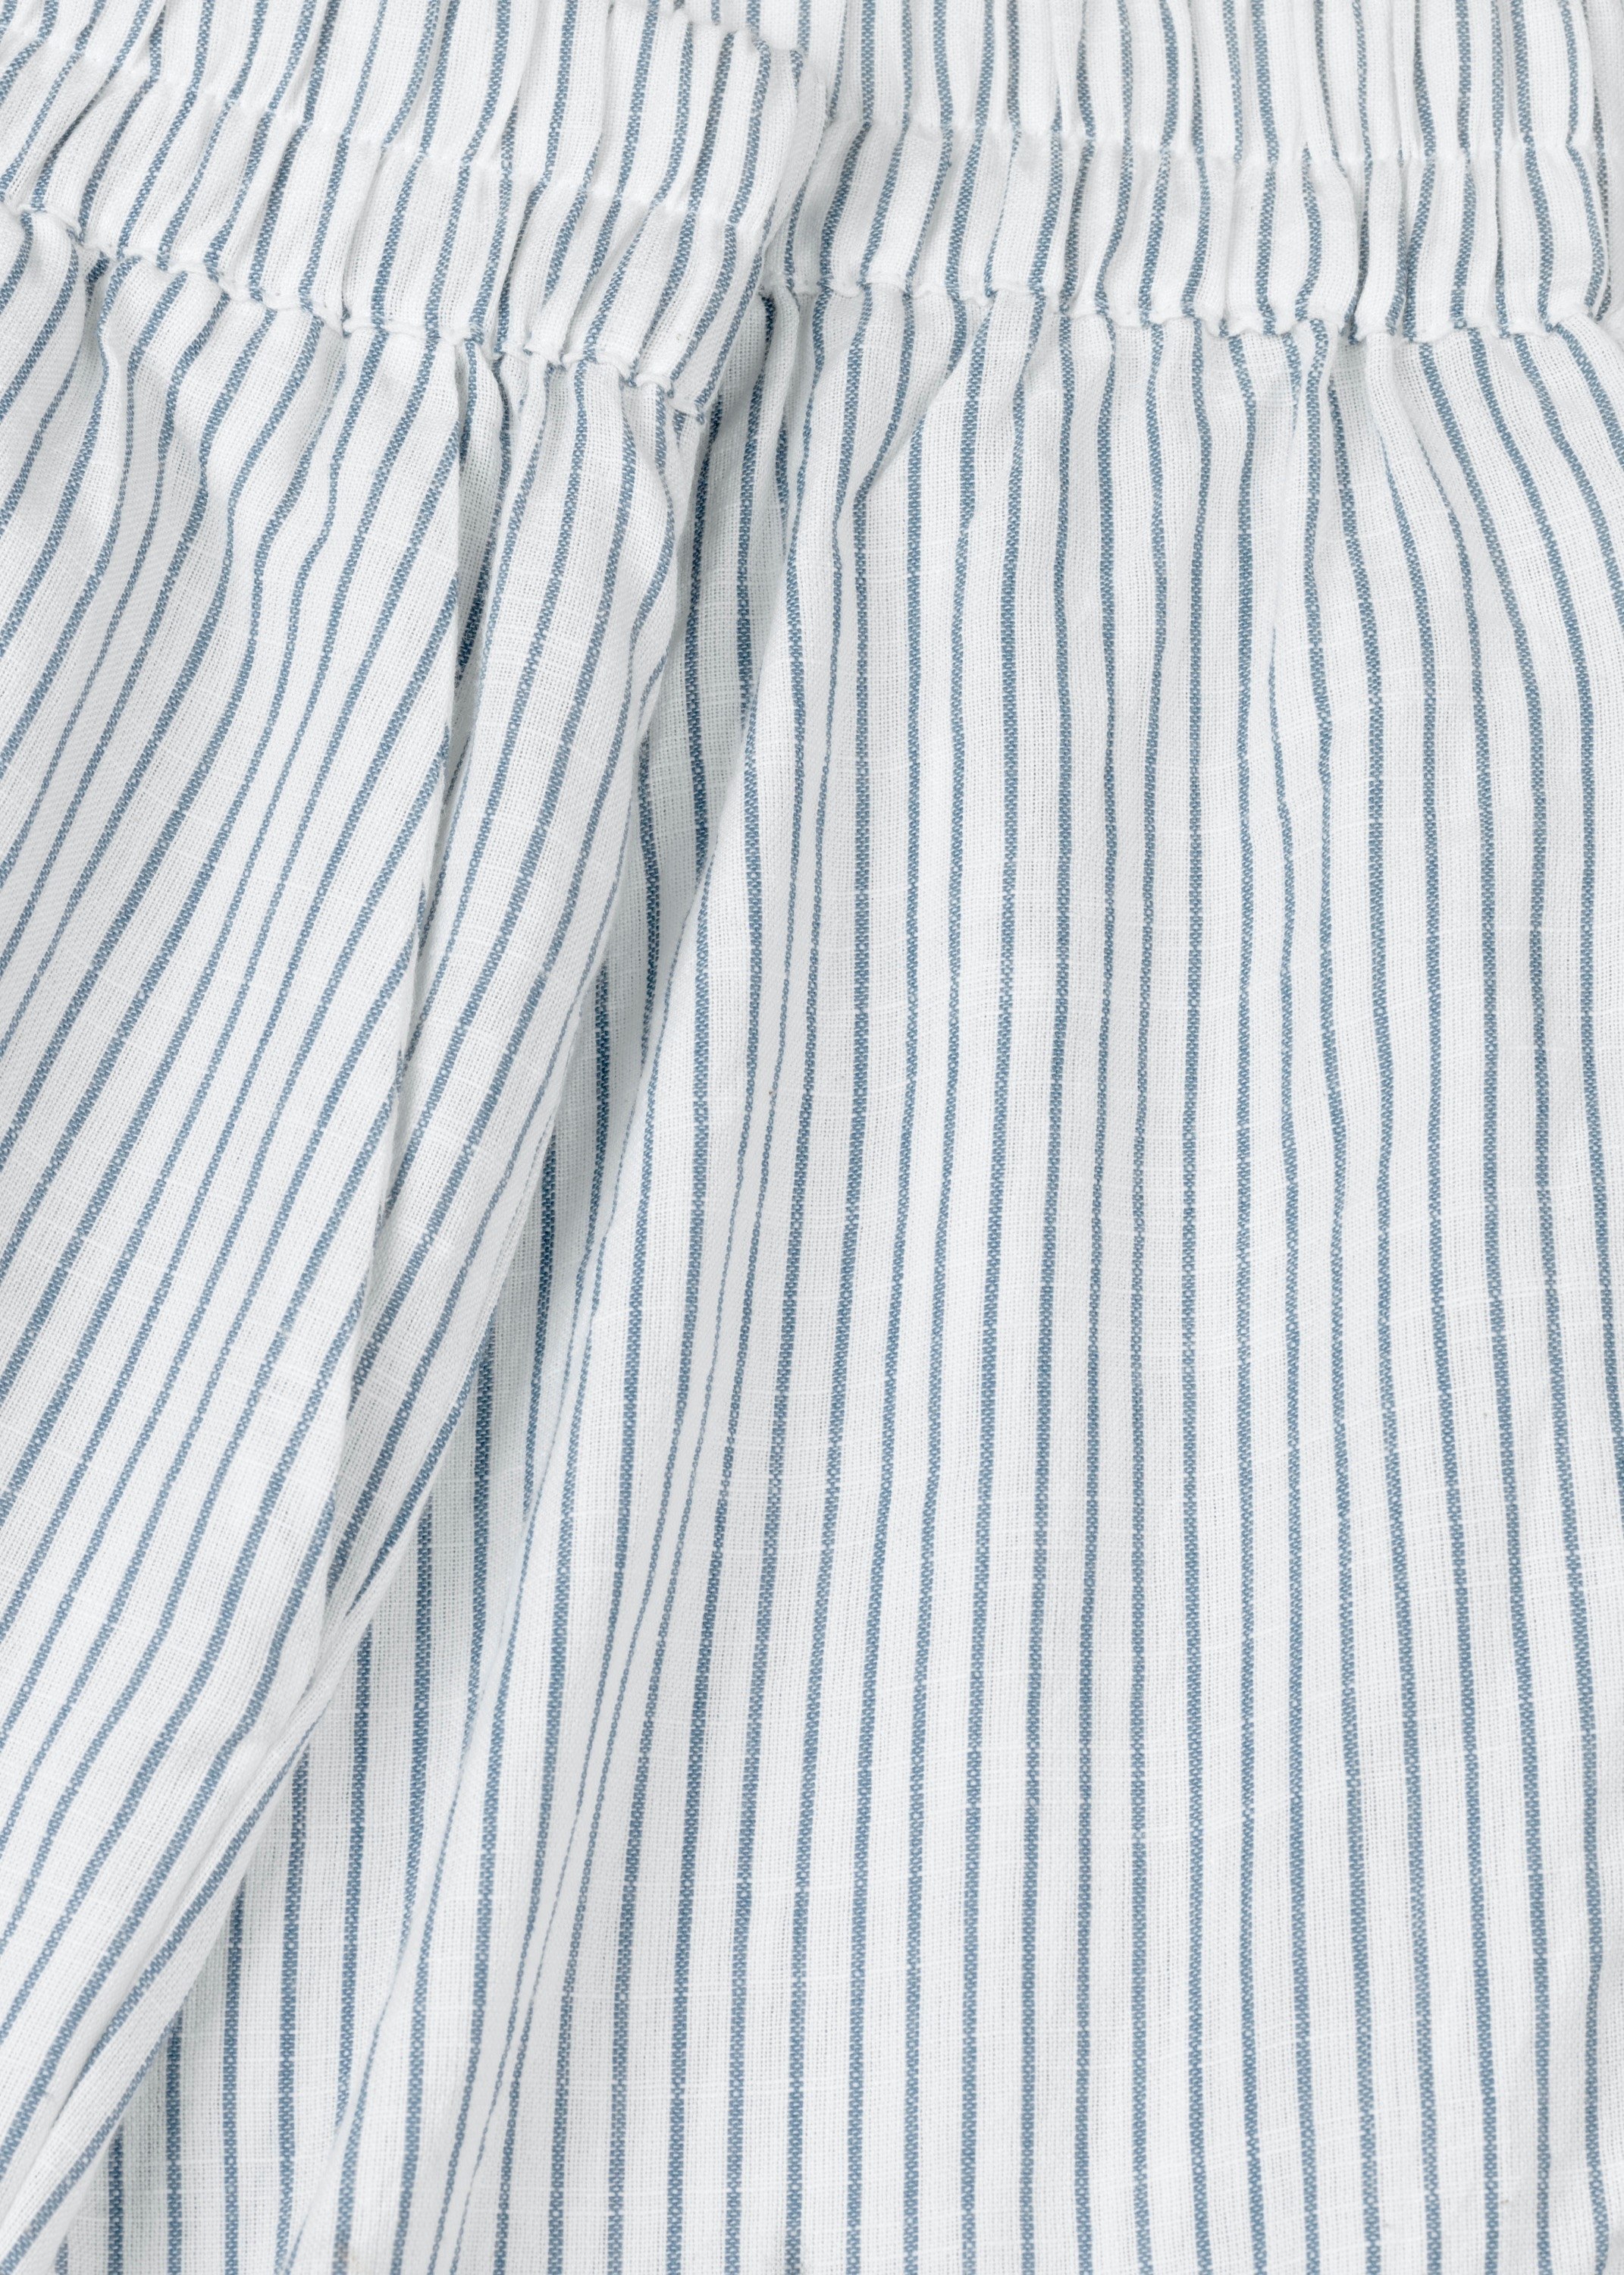 Hosen & Shorts - Shorts Long Striped